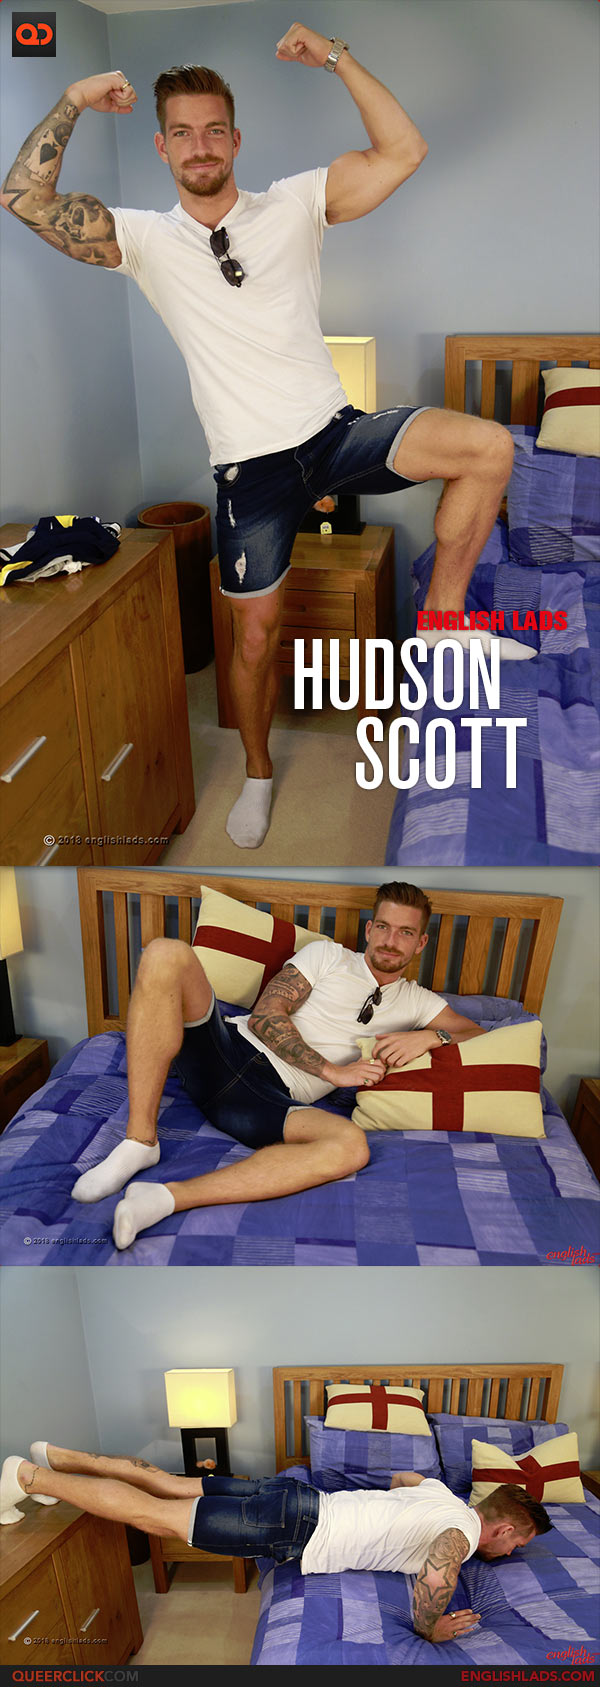 English Lads: Hudson Scott